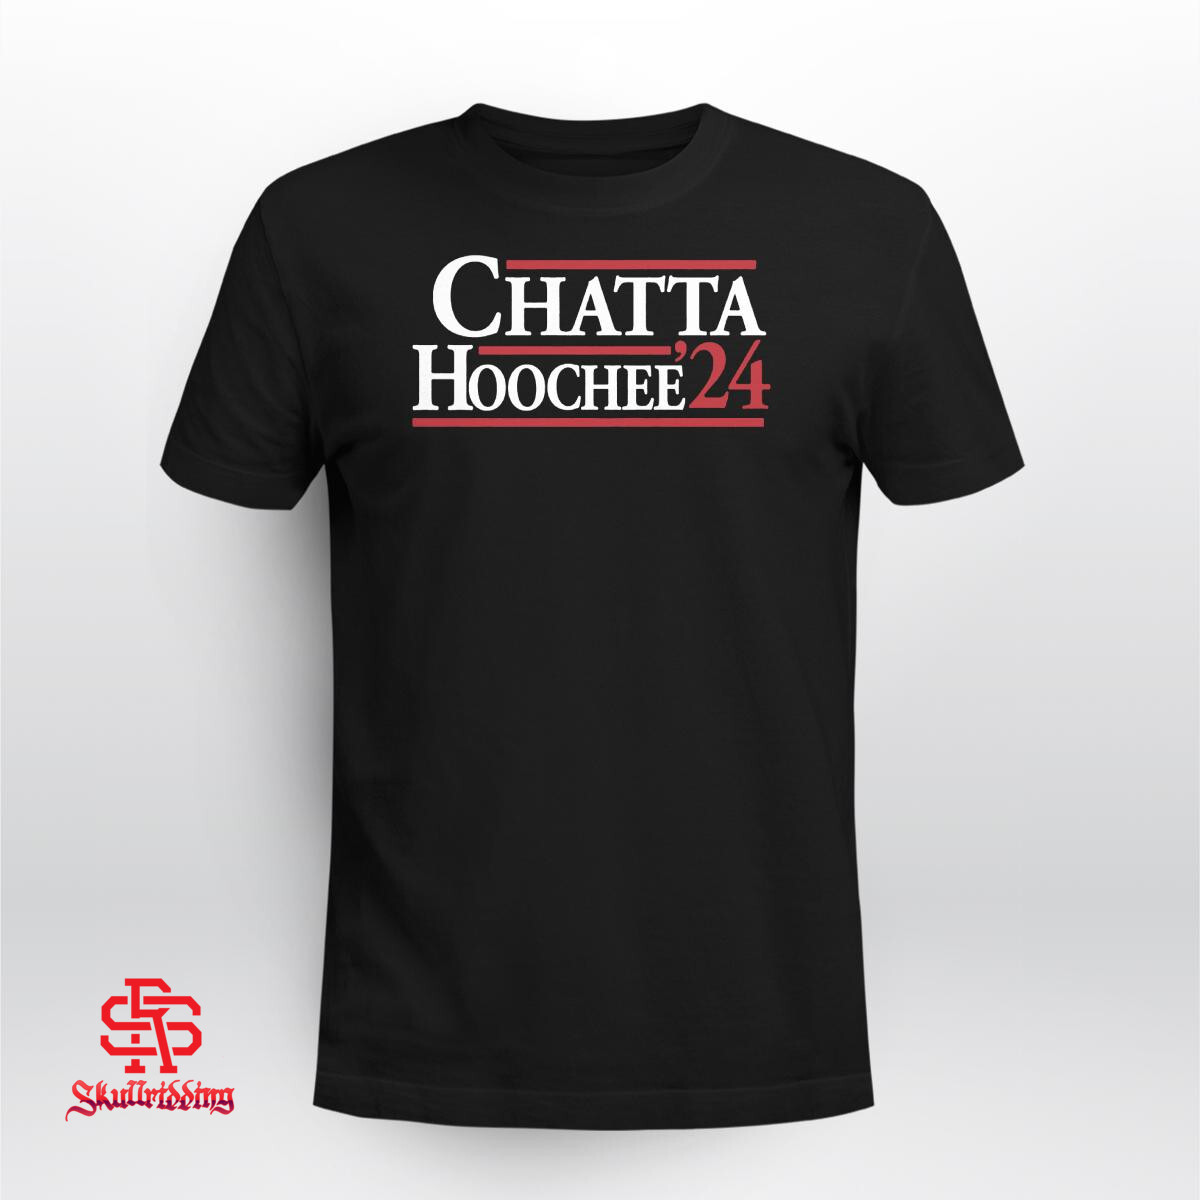 Chattahoochee '24